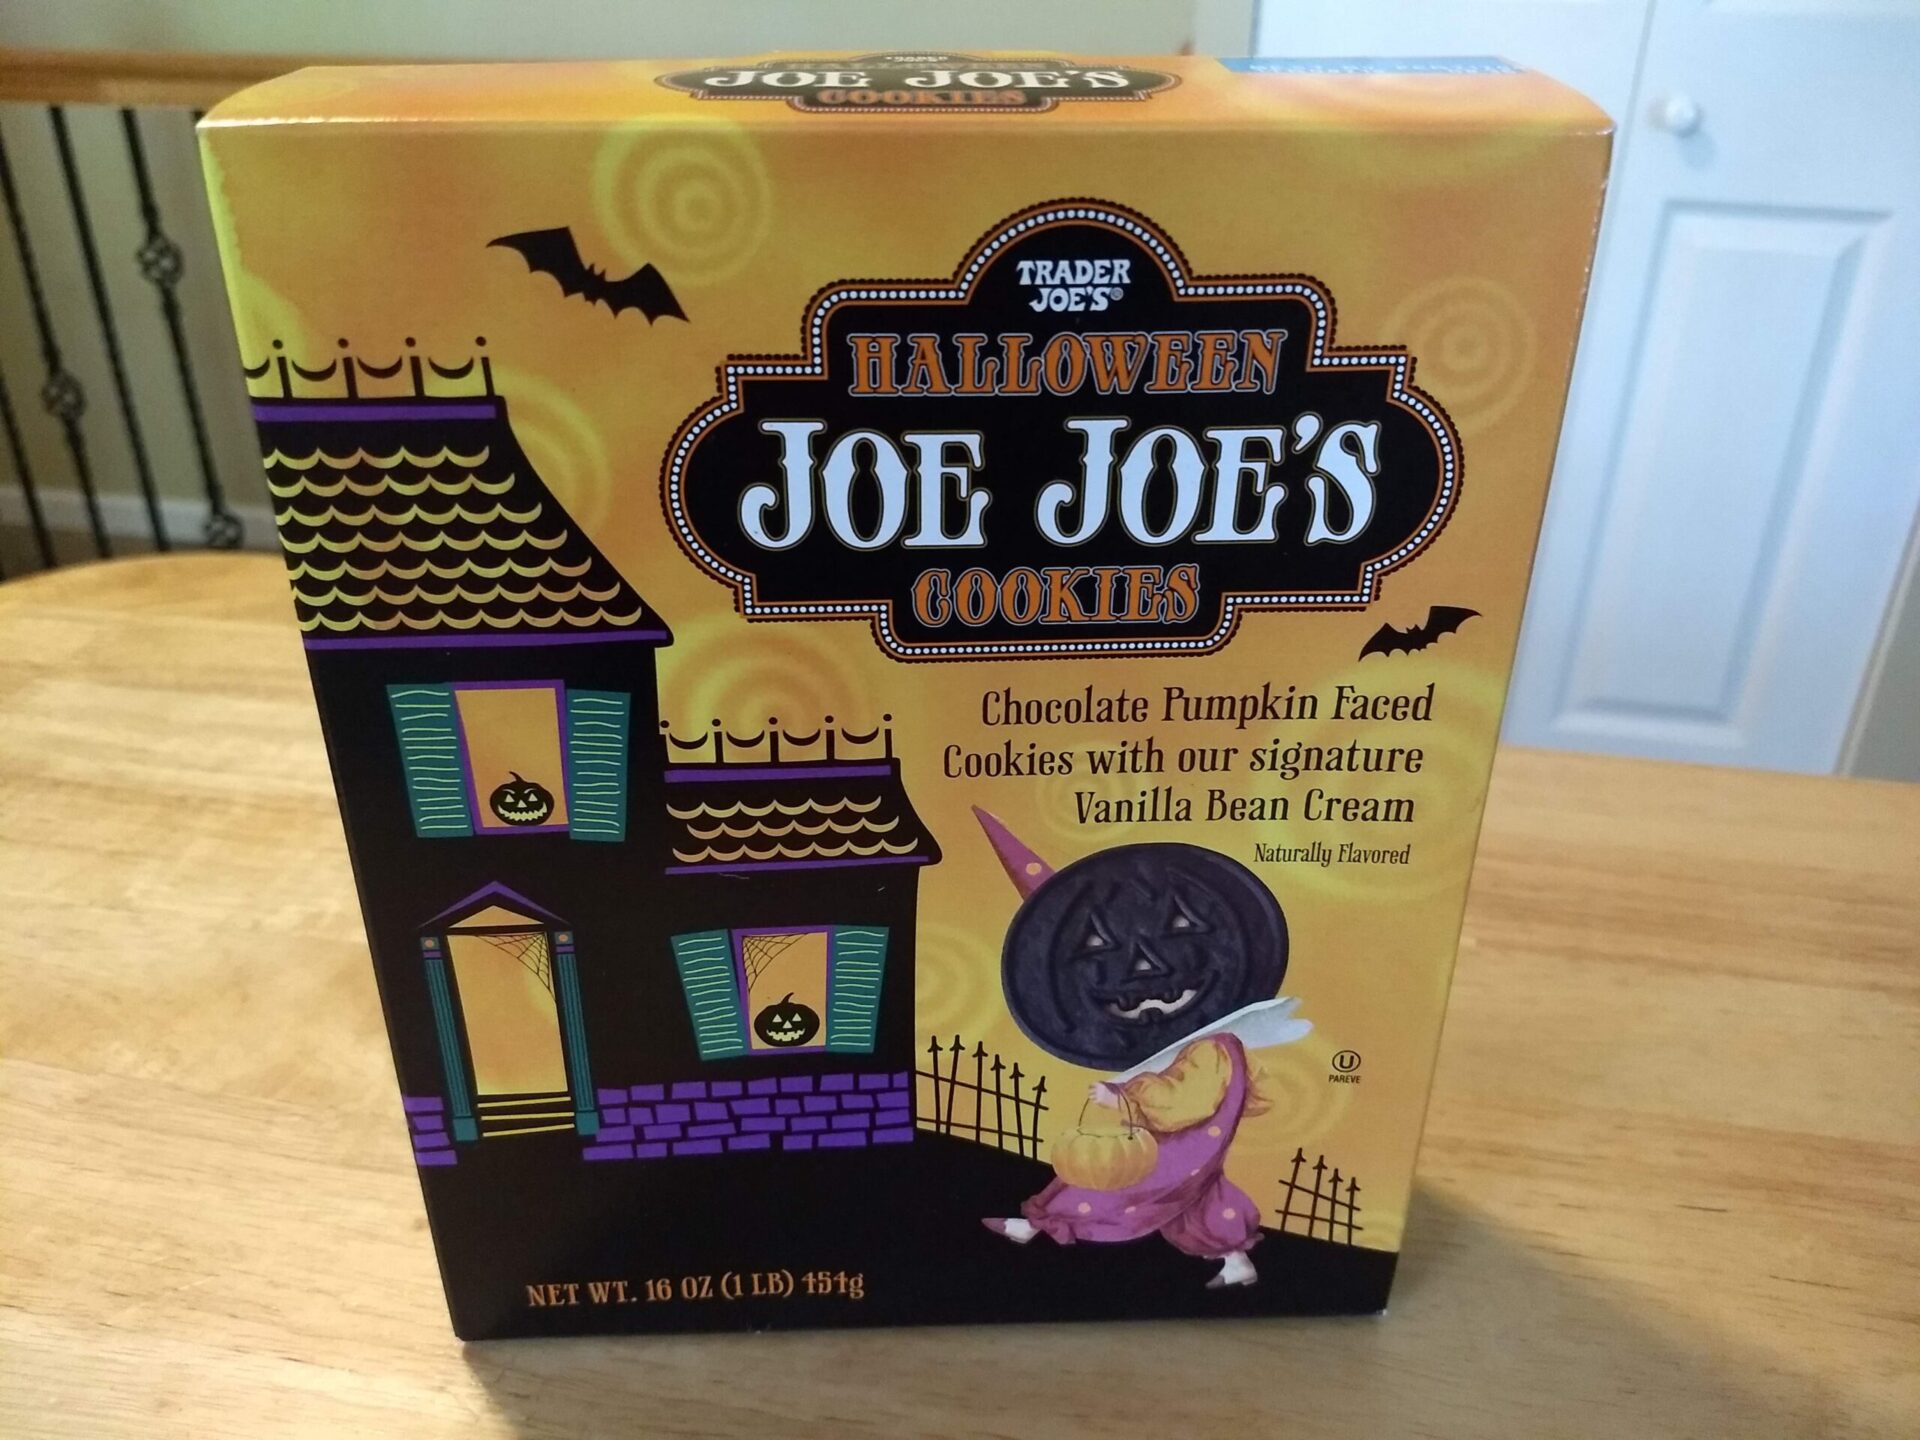 Trader Joe's Halloween Joe Joe's Cookies